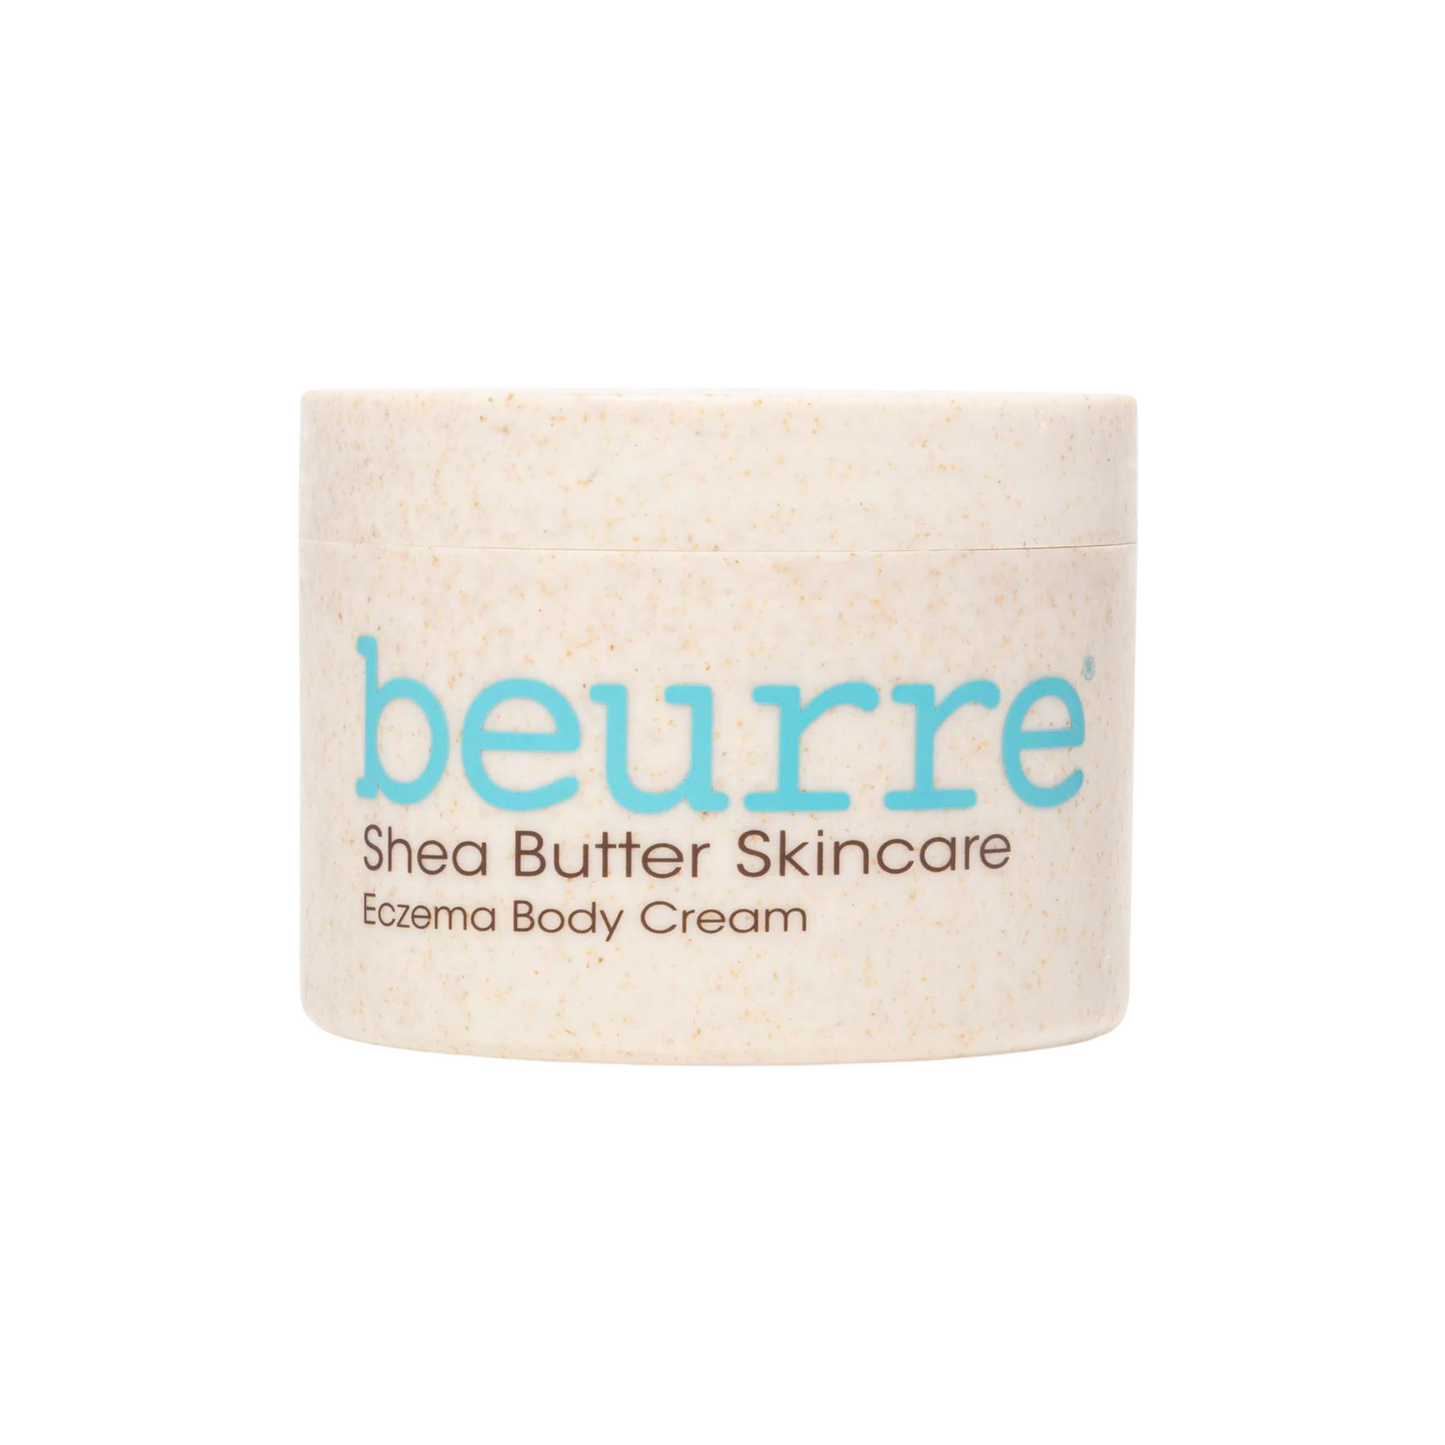 Beurre Shea Butter Eczema Cream